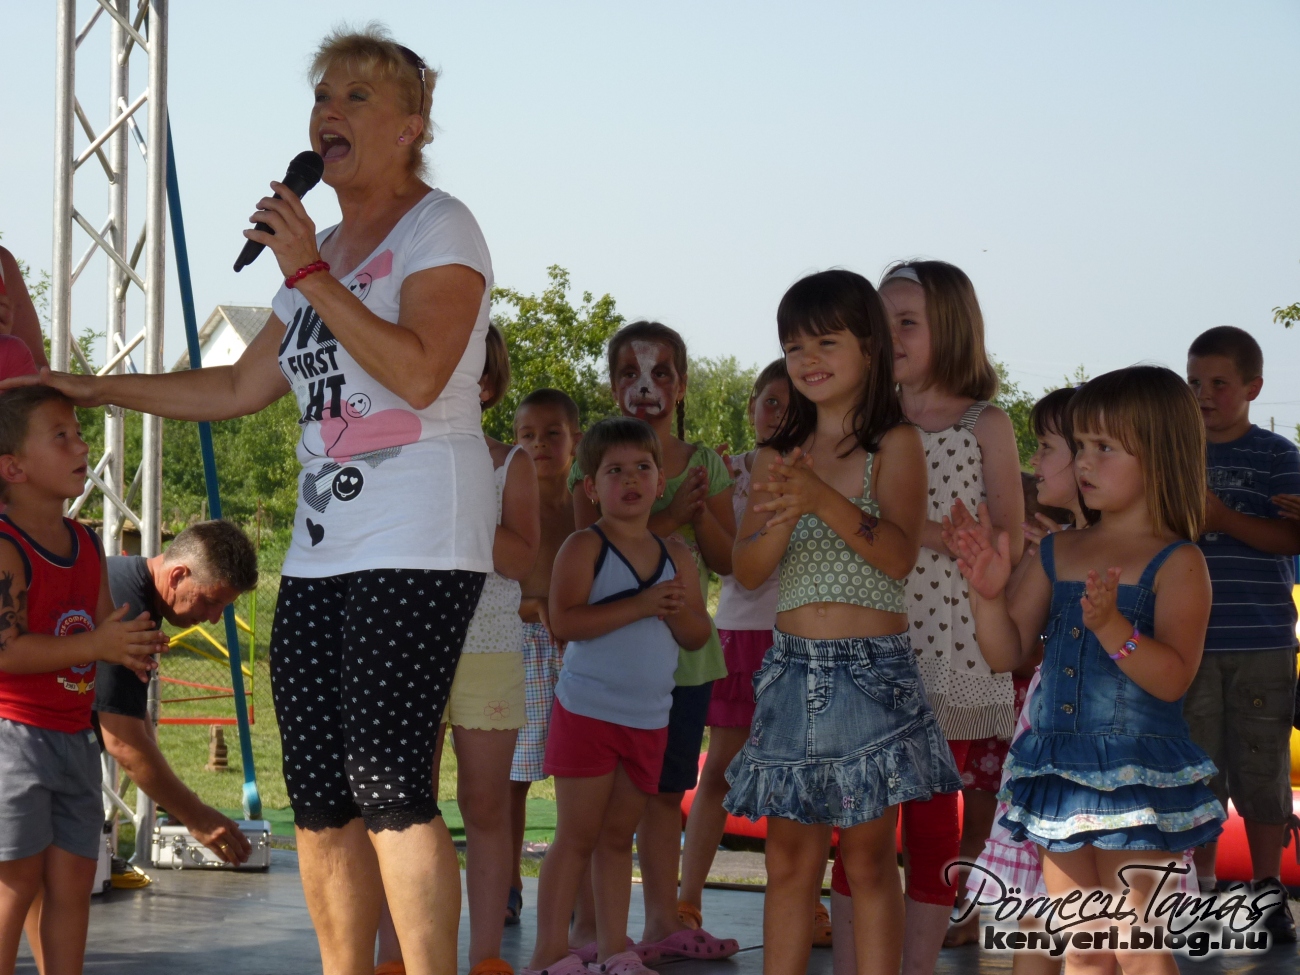 2011 - Papp Rita a kenyeri gyerekekkel énekel